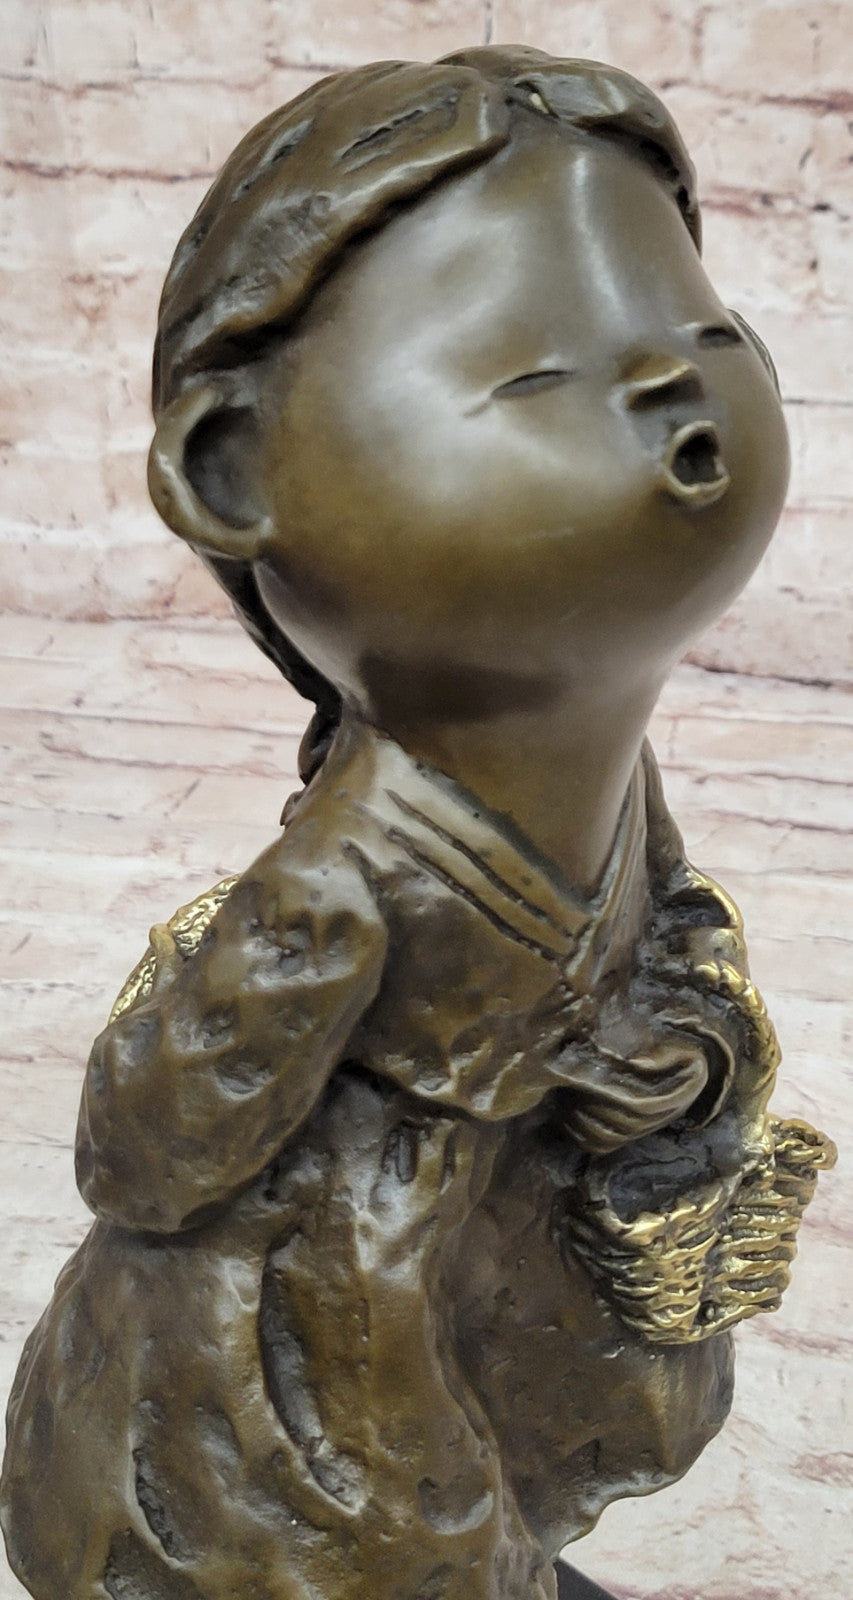 Milo's Bronze Chinese Girl Holding Basket Art Sculpture Figurine Gift